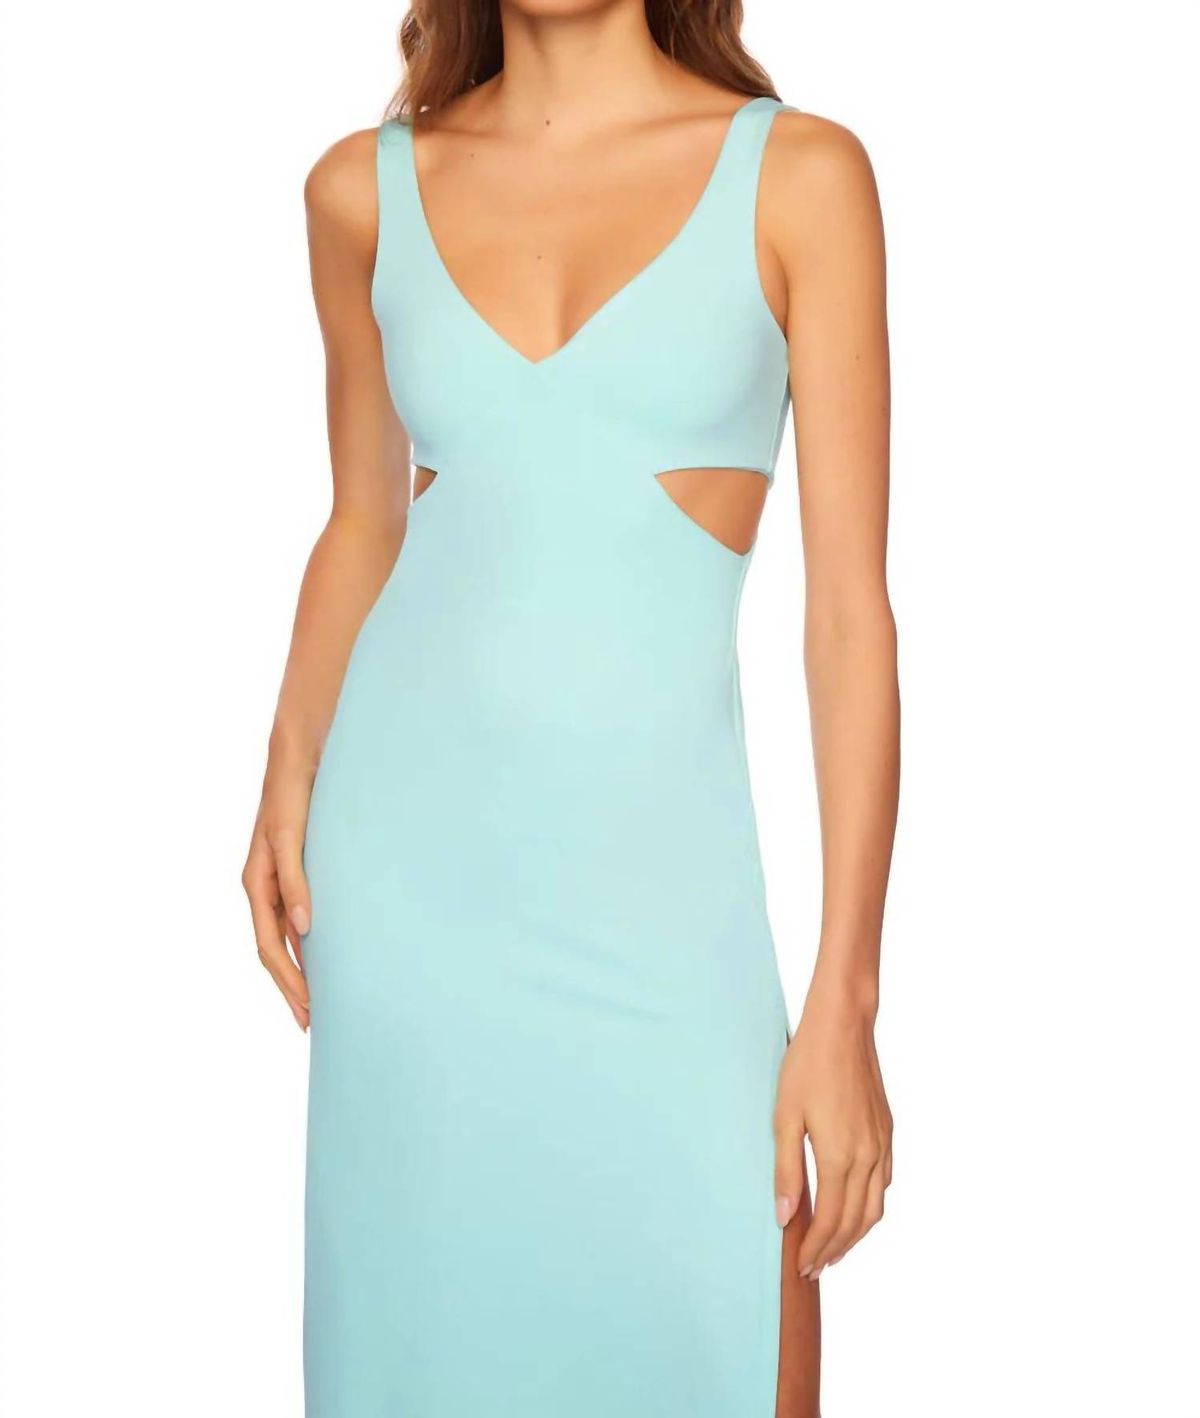 Style 1-3588506398-3236 Susana Monaco Size S Light Green Side Slit Dress on Queenly